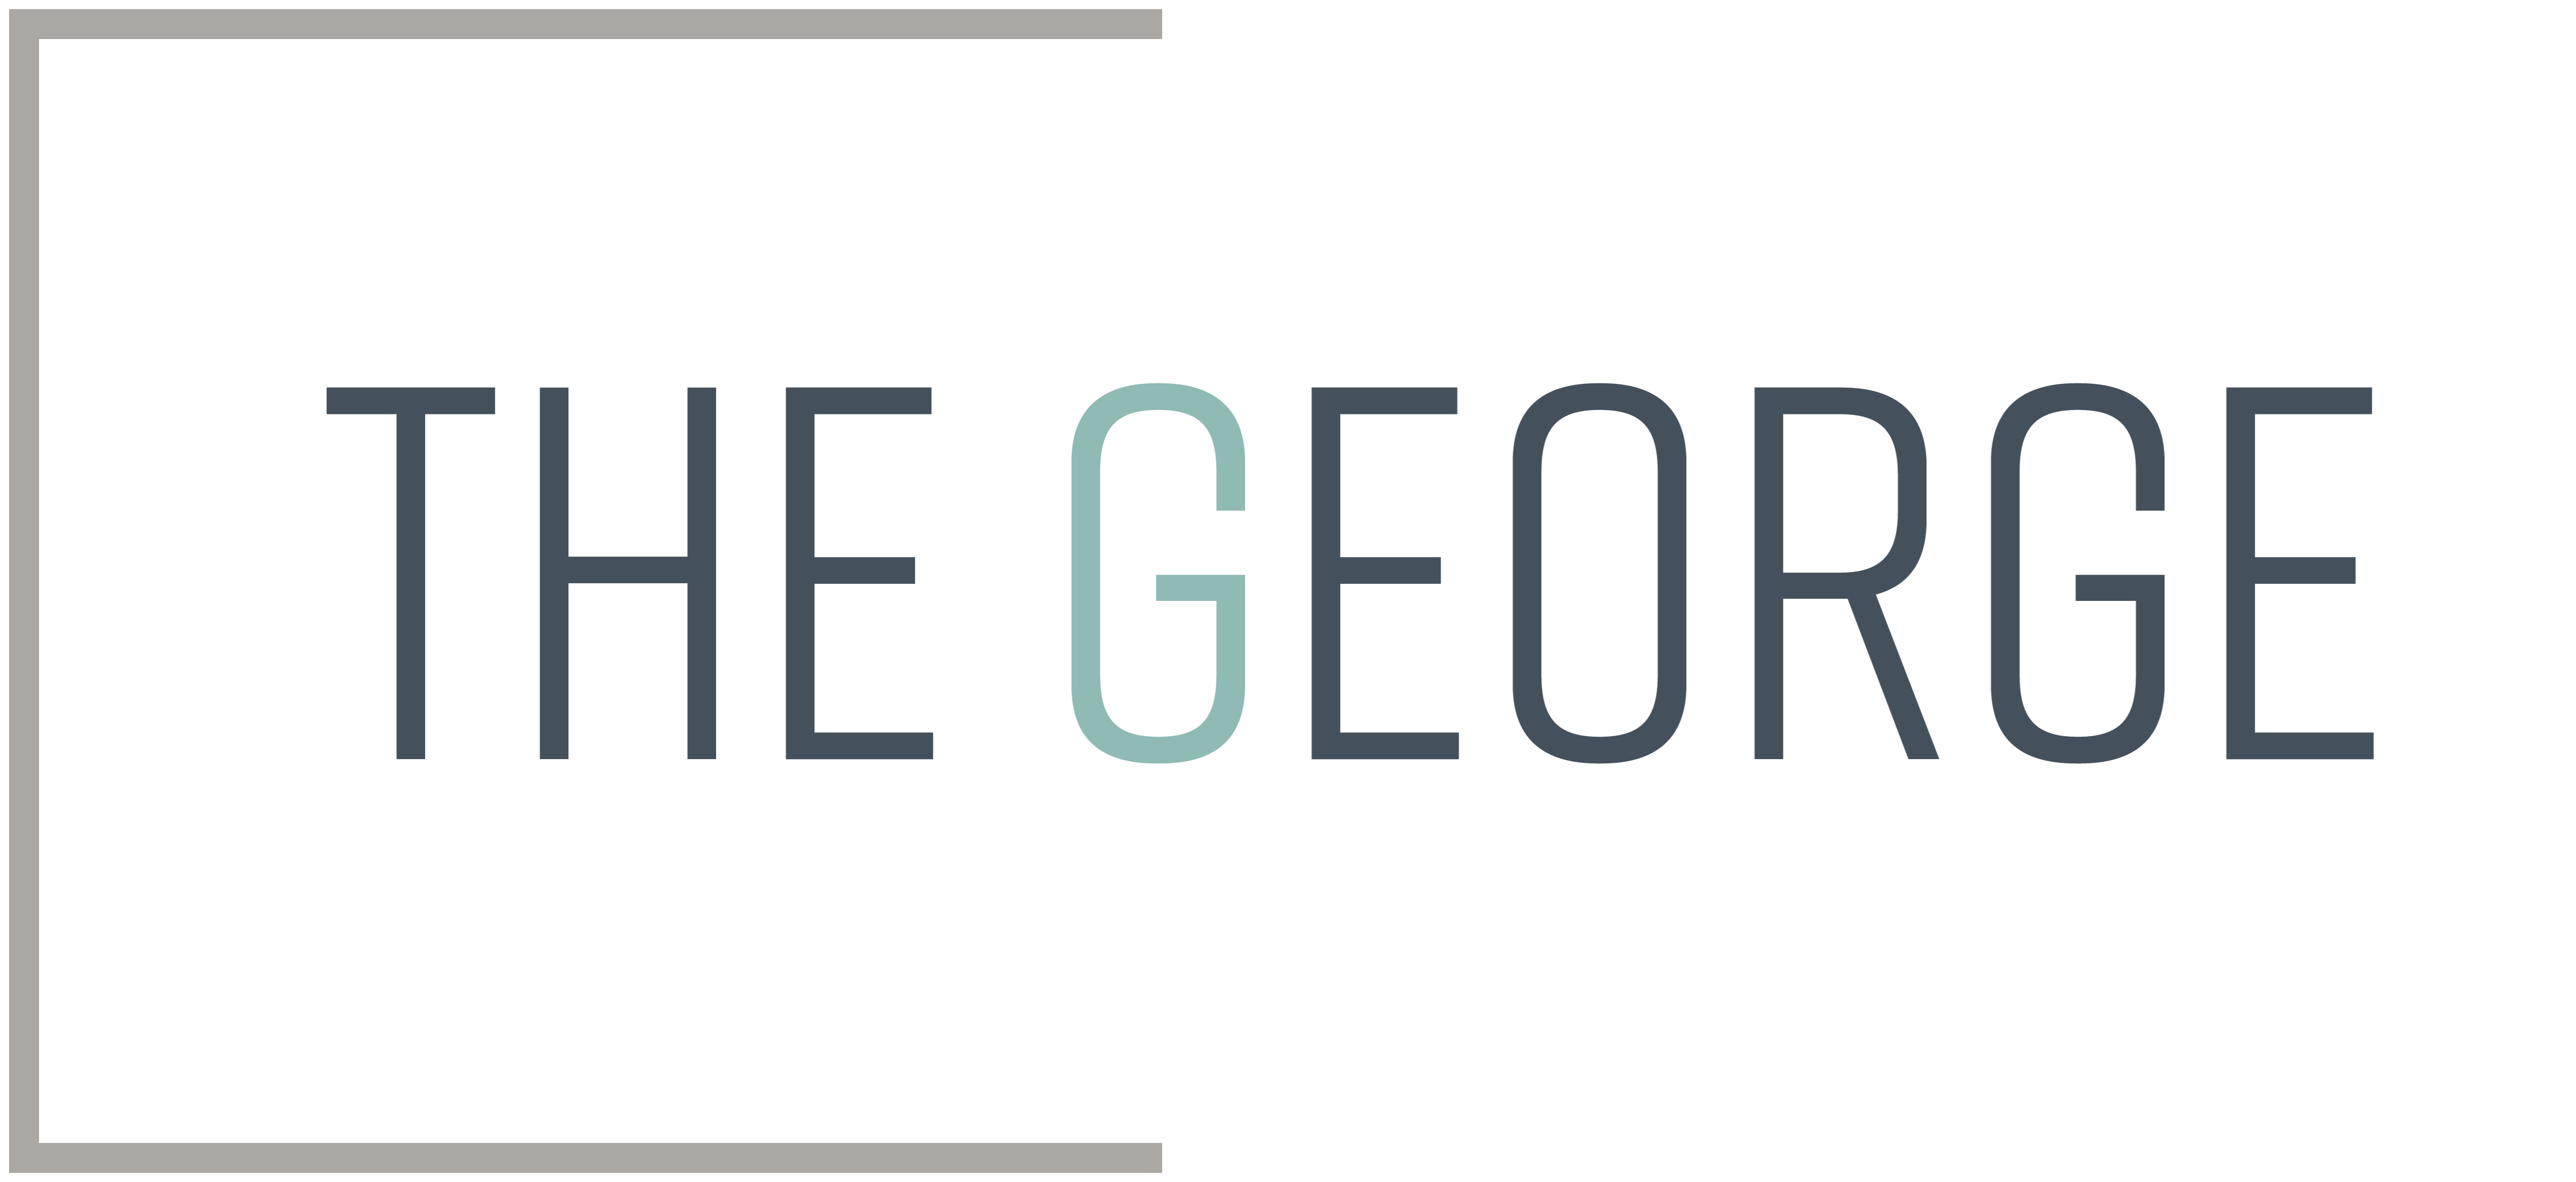 George Logo - Apartments in Ann Arbor, MI | The George